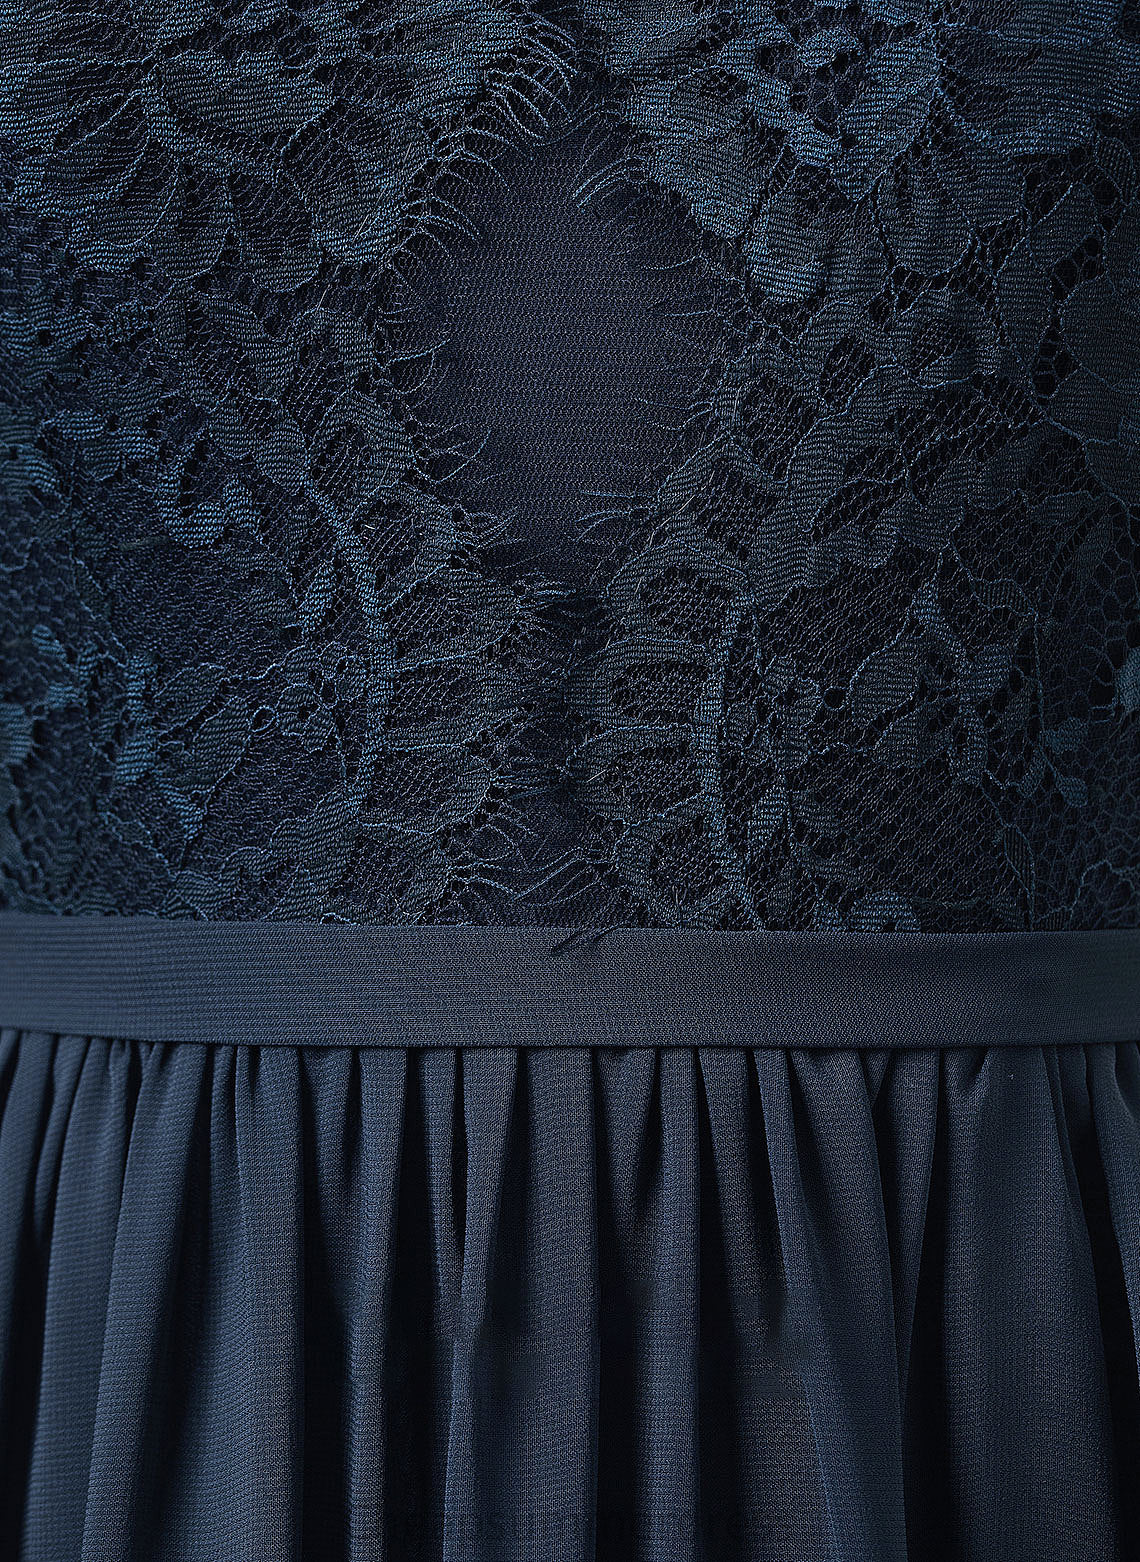 Length Fabric Neckline ScoopNeck A-Line SplitFront Embellishment Silhouette Floor-Length Maliyah Sleeveless Floor Length